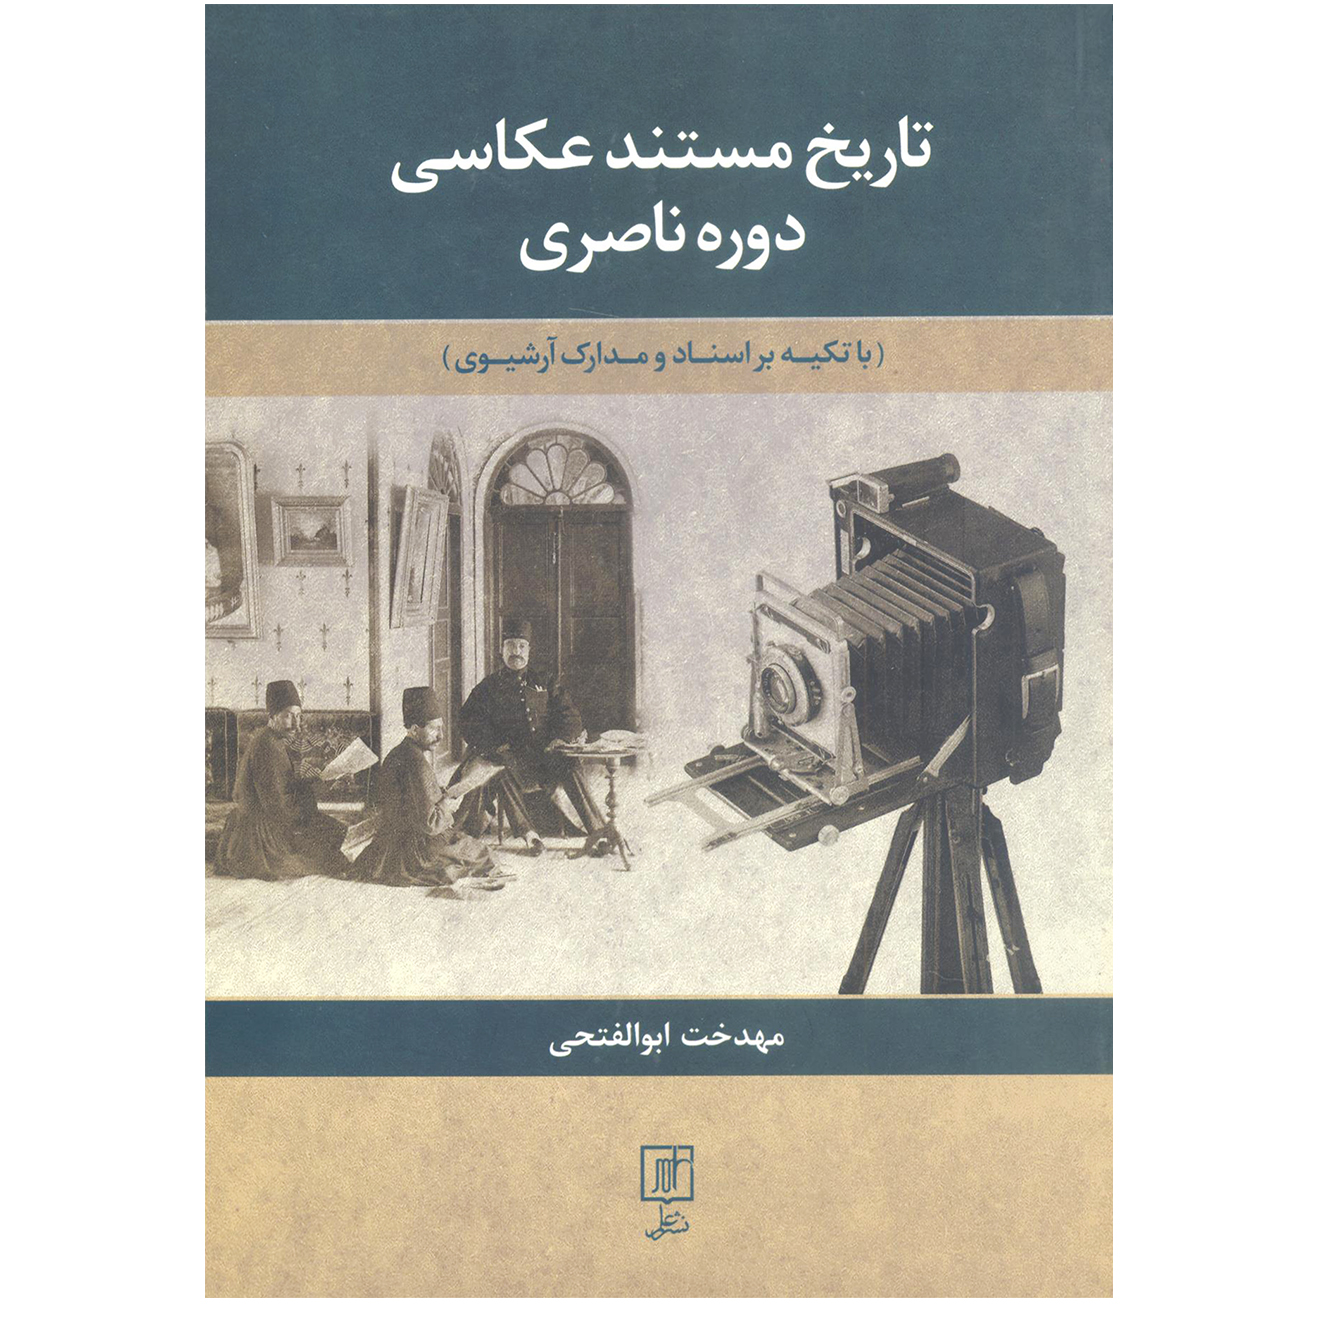 کتاب تاریخ مستند عکاسی دوره ناصری اثر مهدخت ابوالفتحی نشر علم